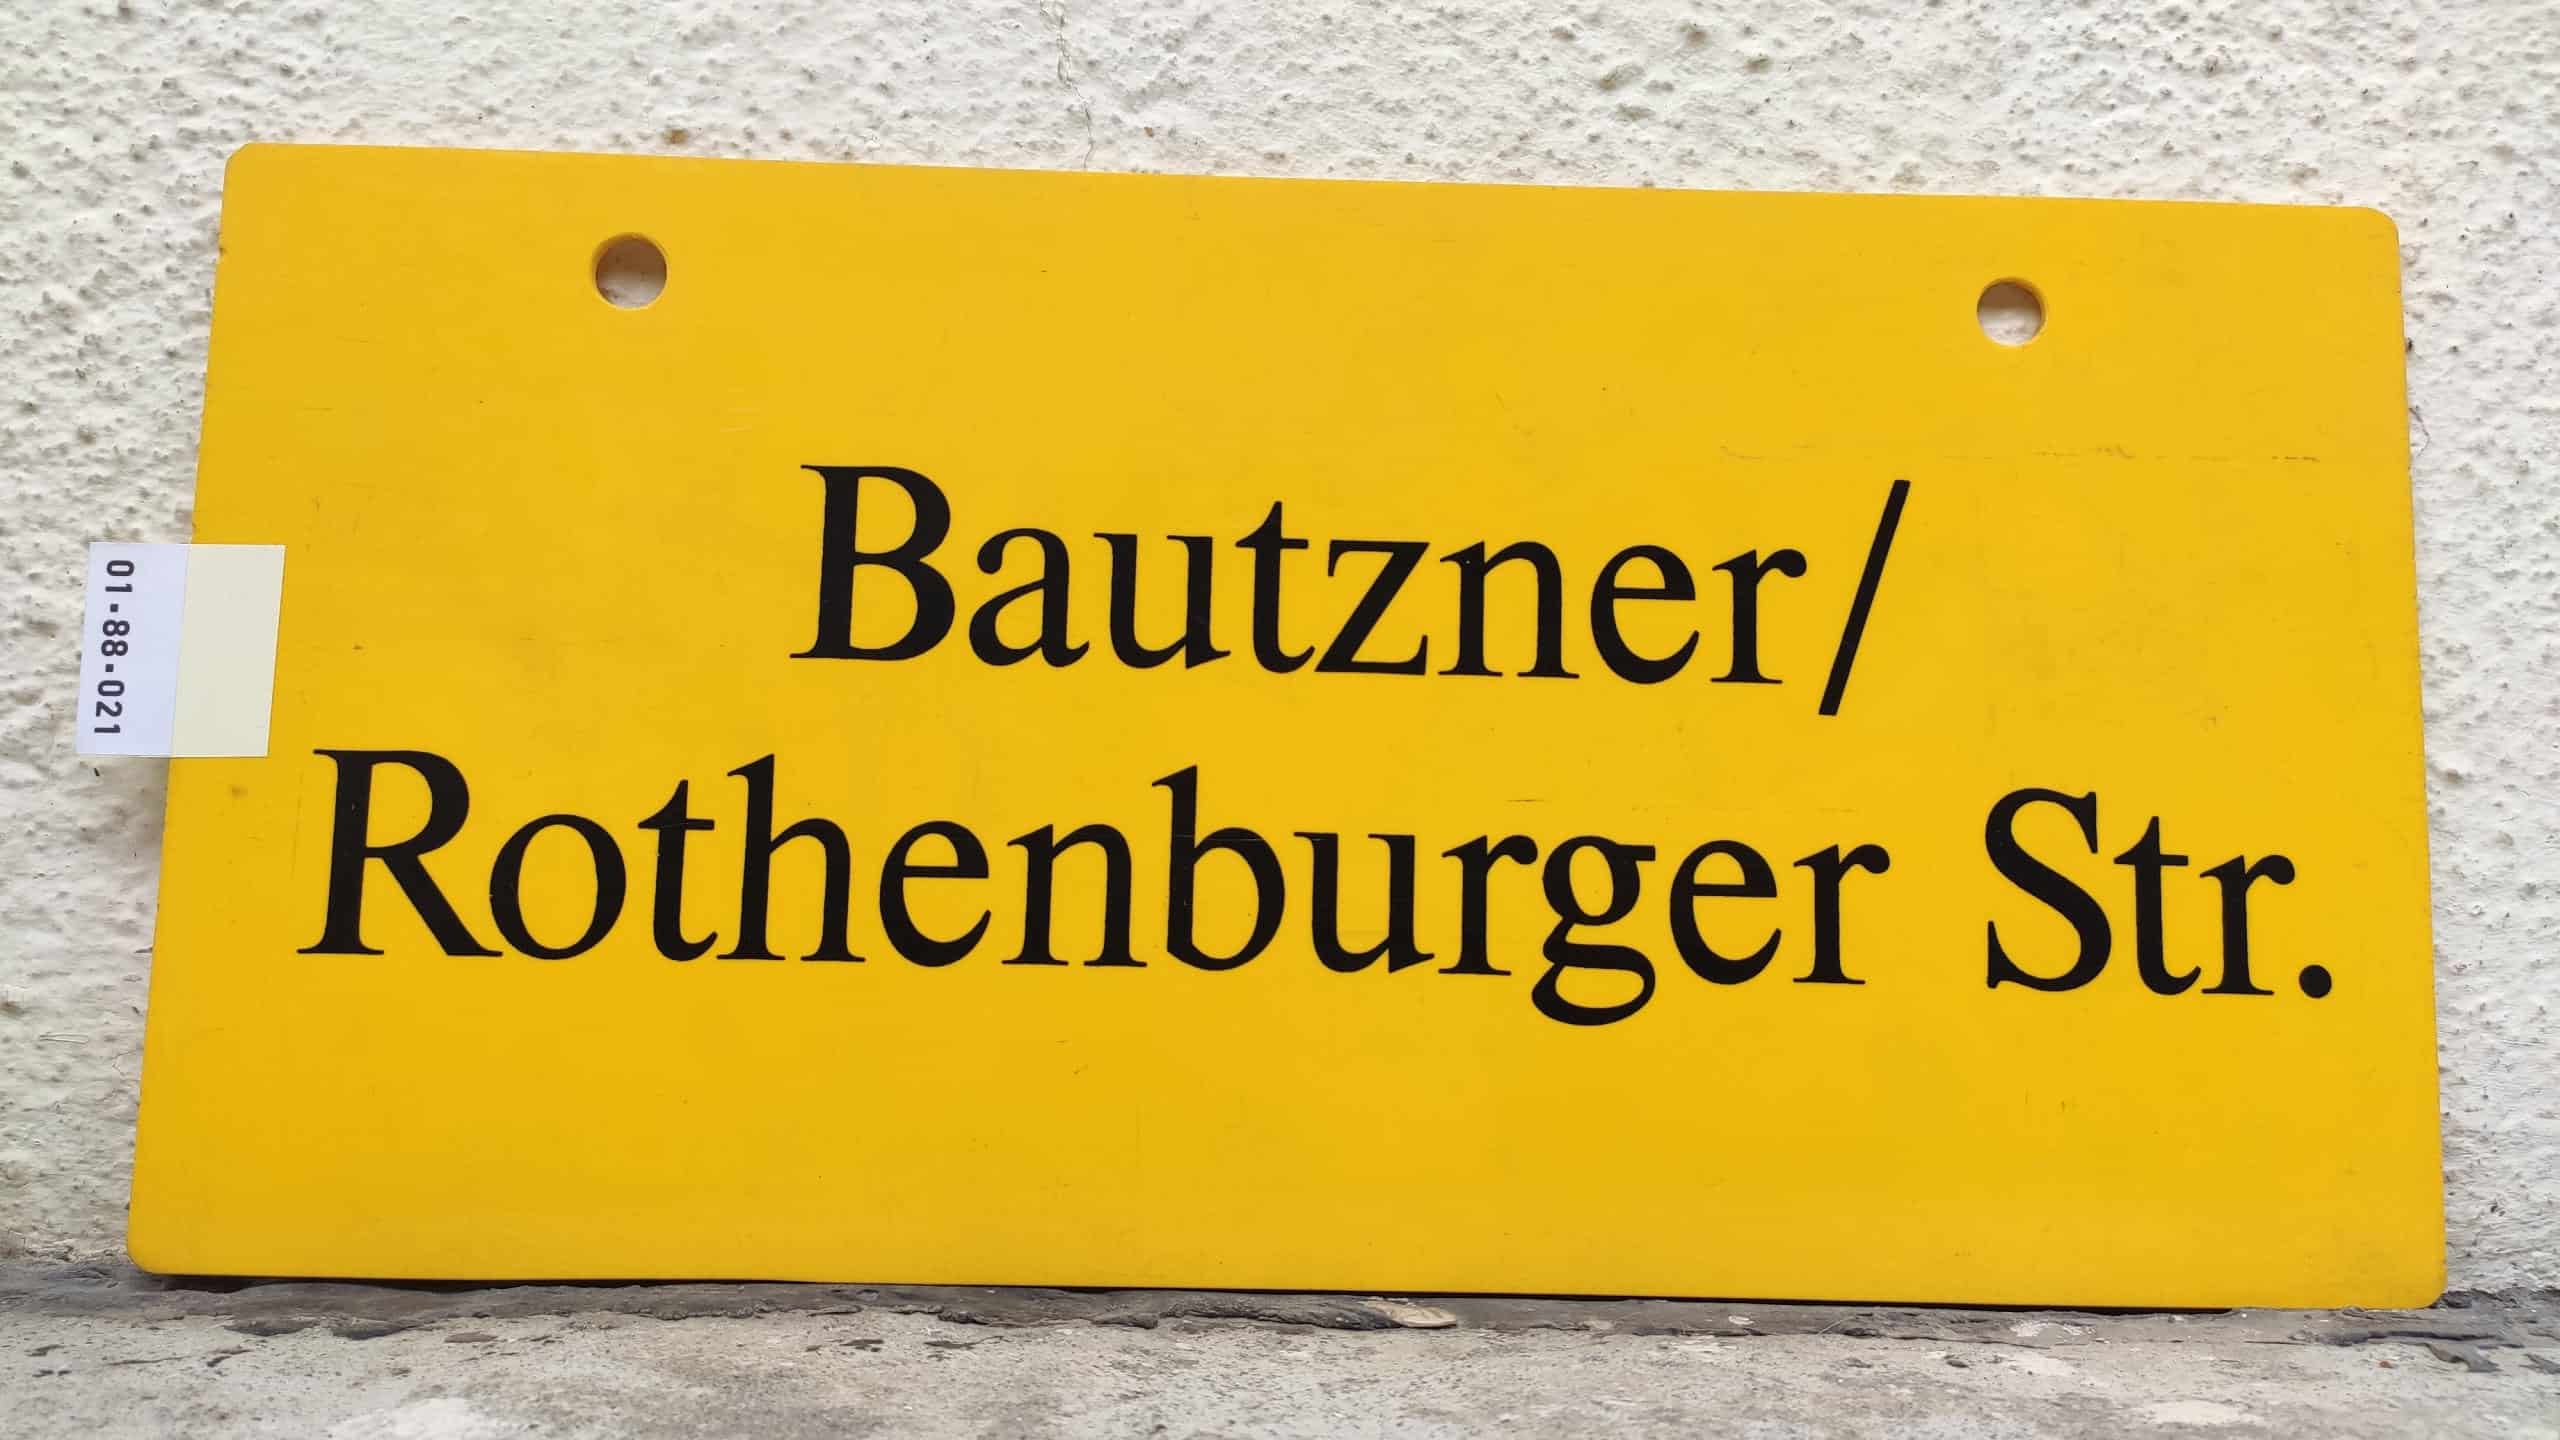 Bautzner/ Rothenburger Str.